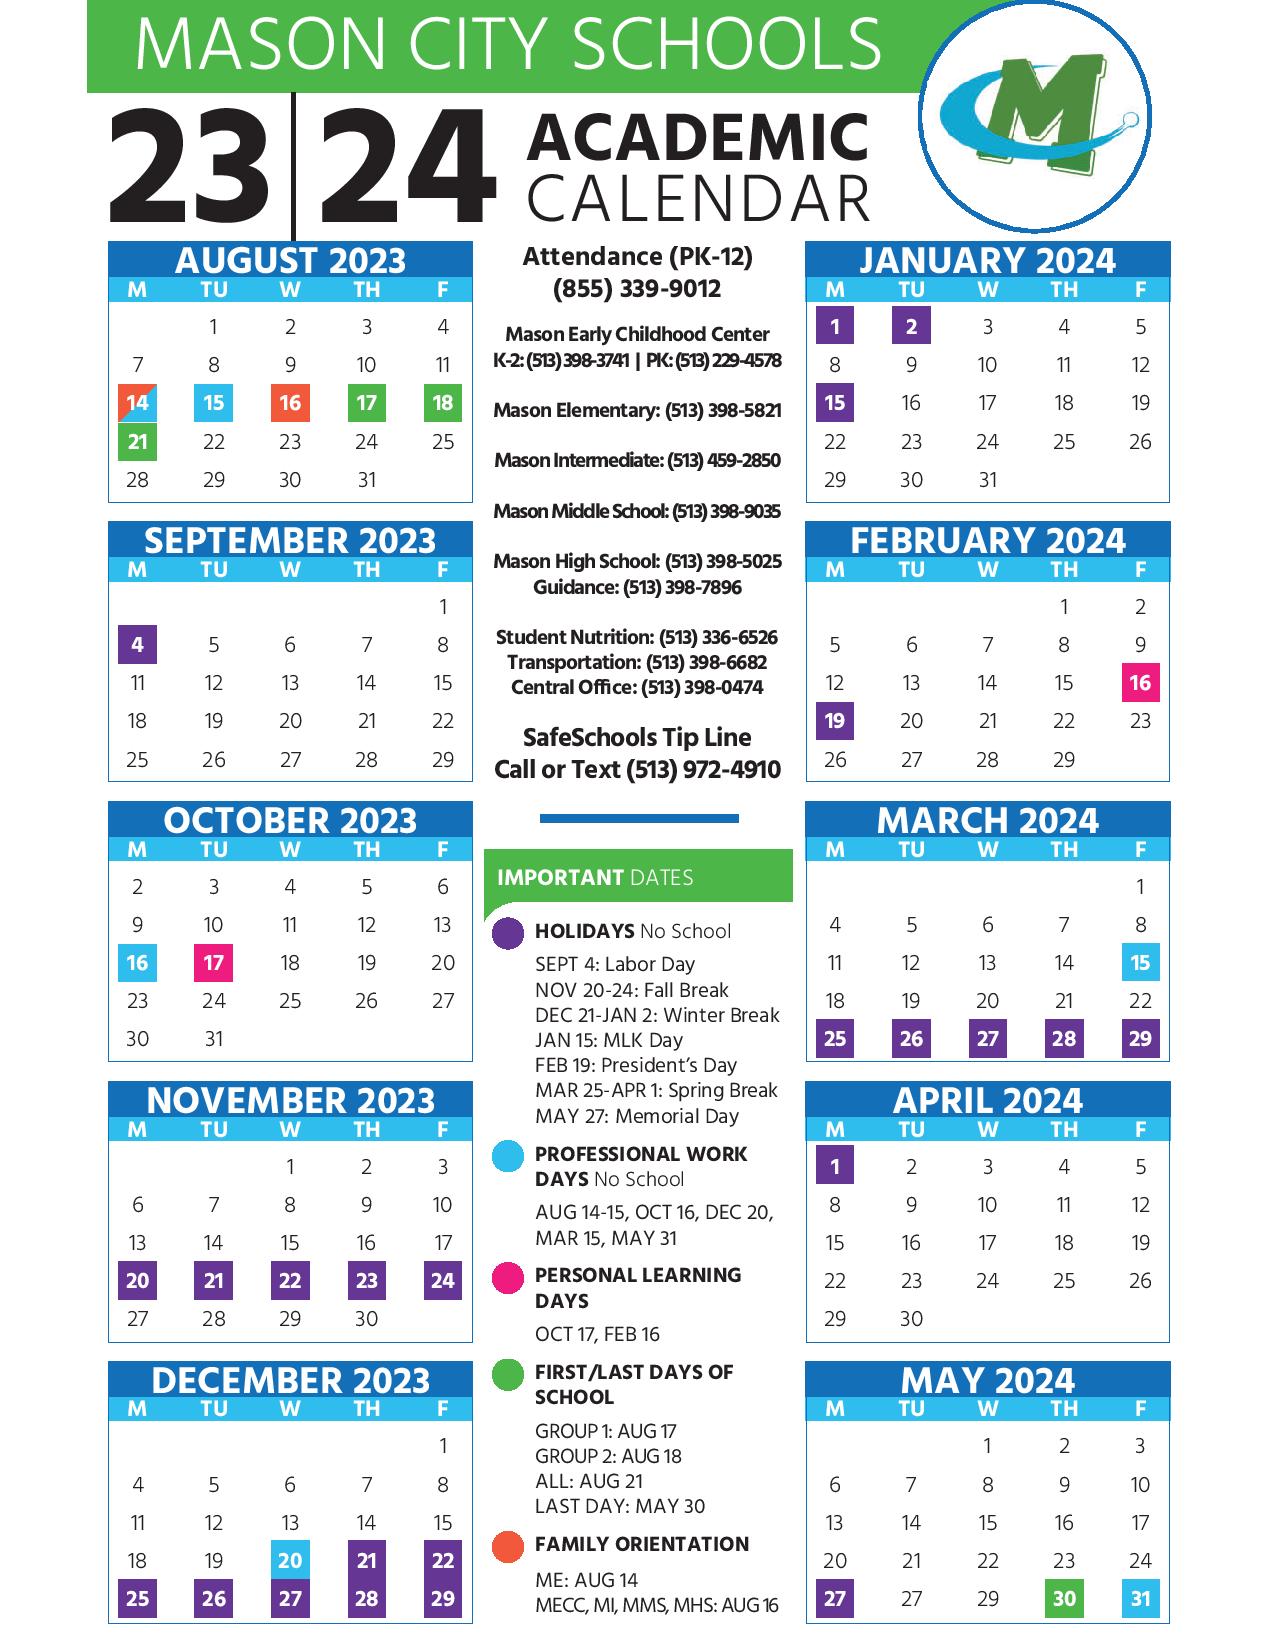 Mason City Schools Calendar 20232024 in PDF